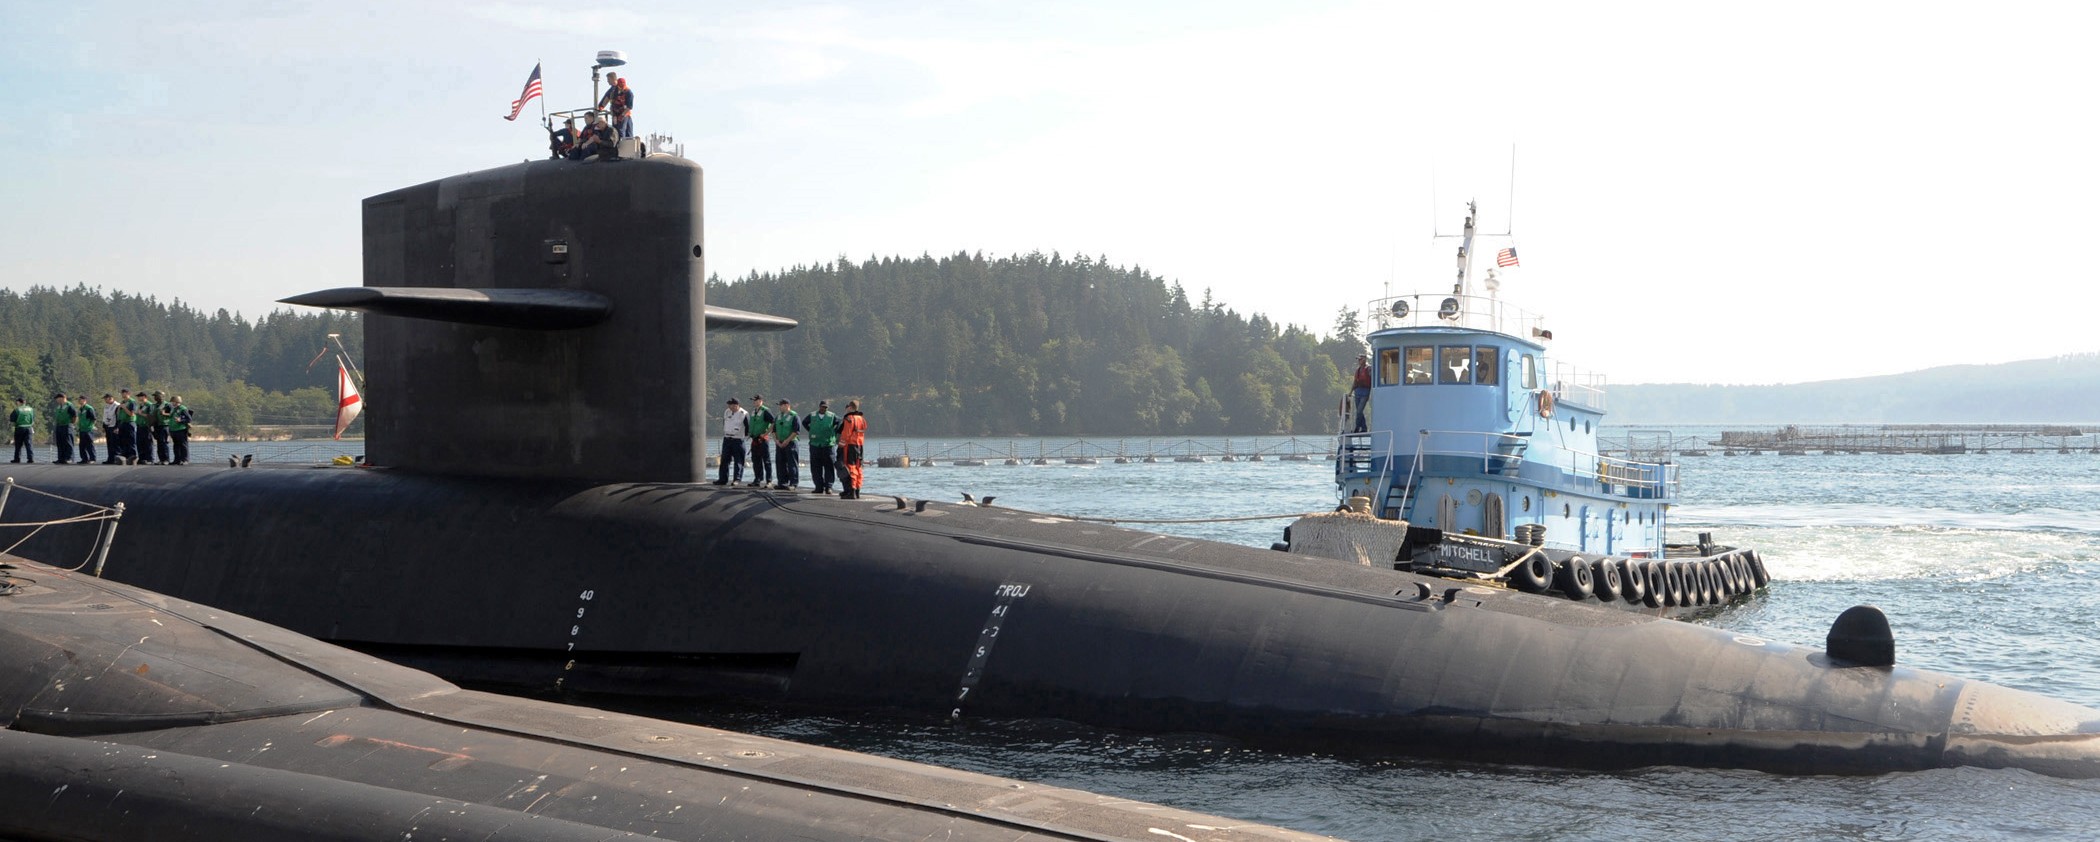 ssbn-731 uss alabama ohio class ballistic missile submarine 2009 23 bangor washington